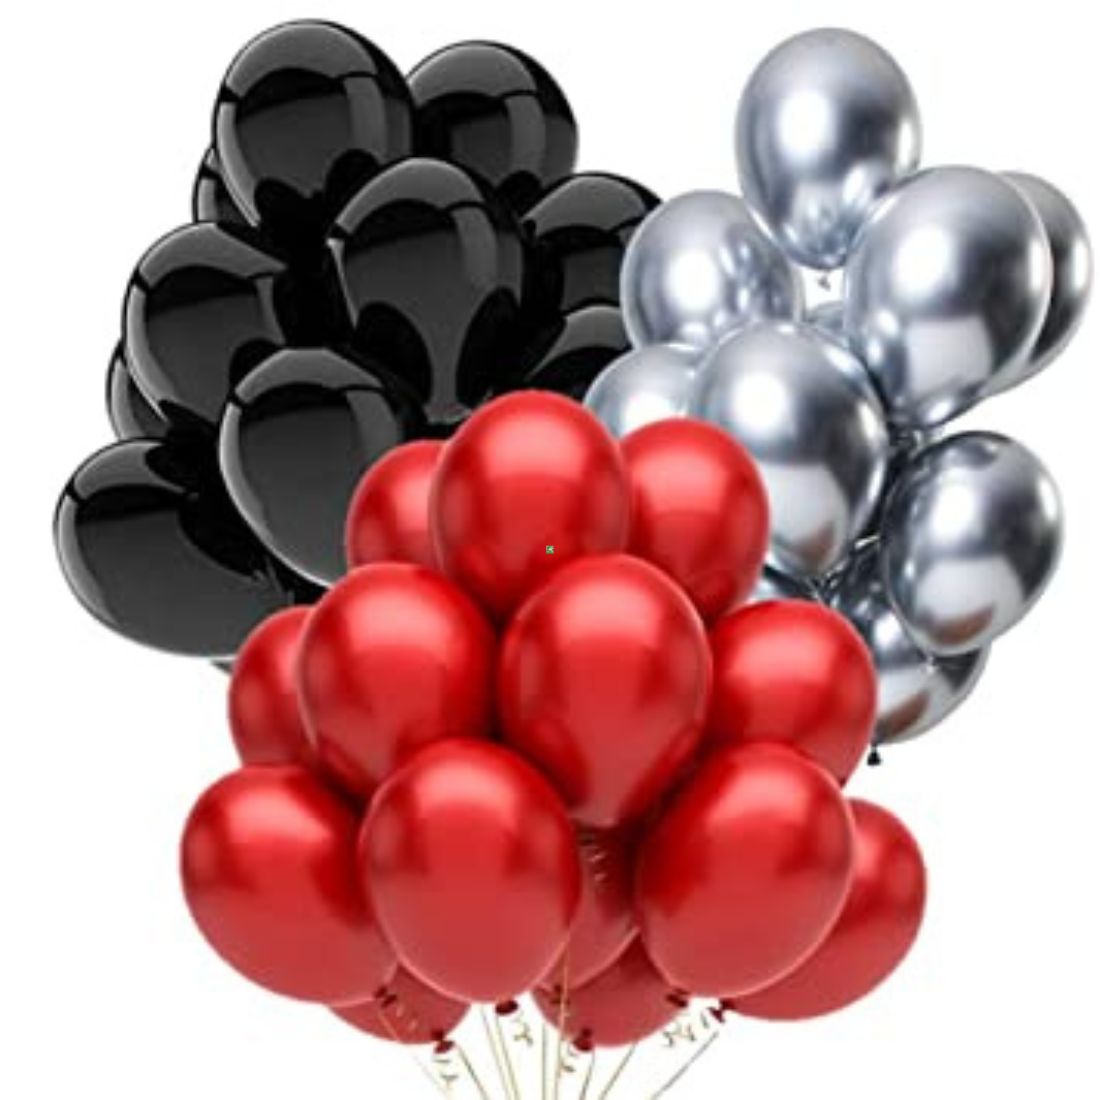 Corporate Event Balloon Decoration – ShilpaMart